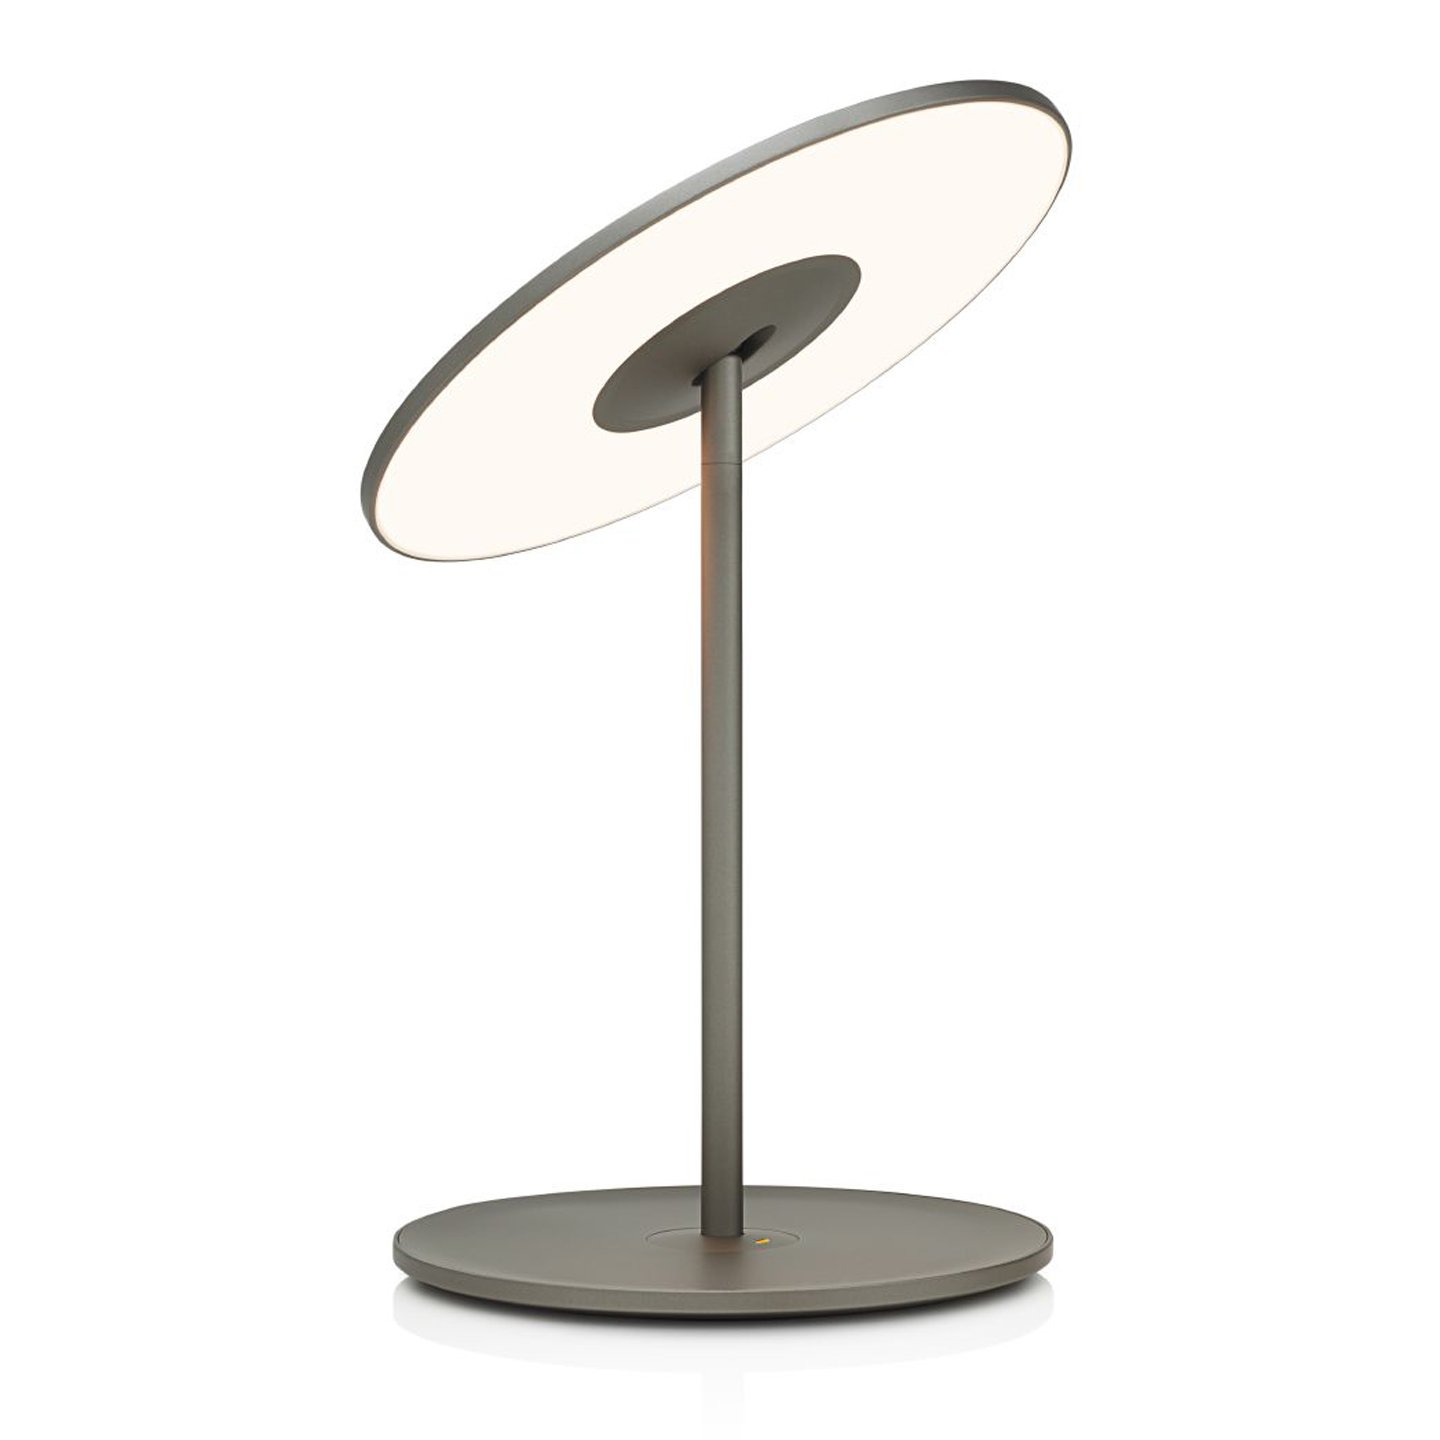 Haworth Circa Lighting desk lamp in grey